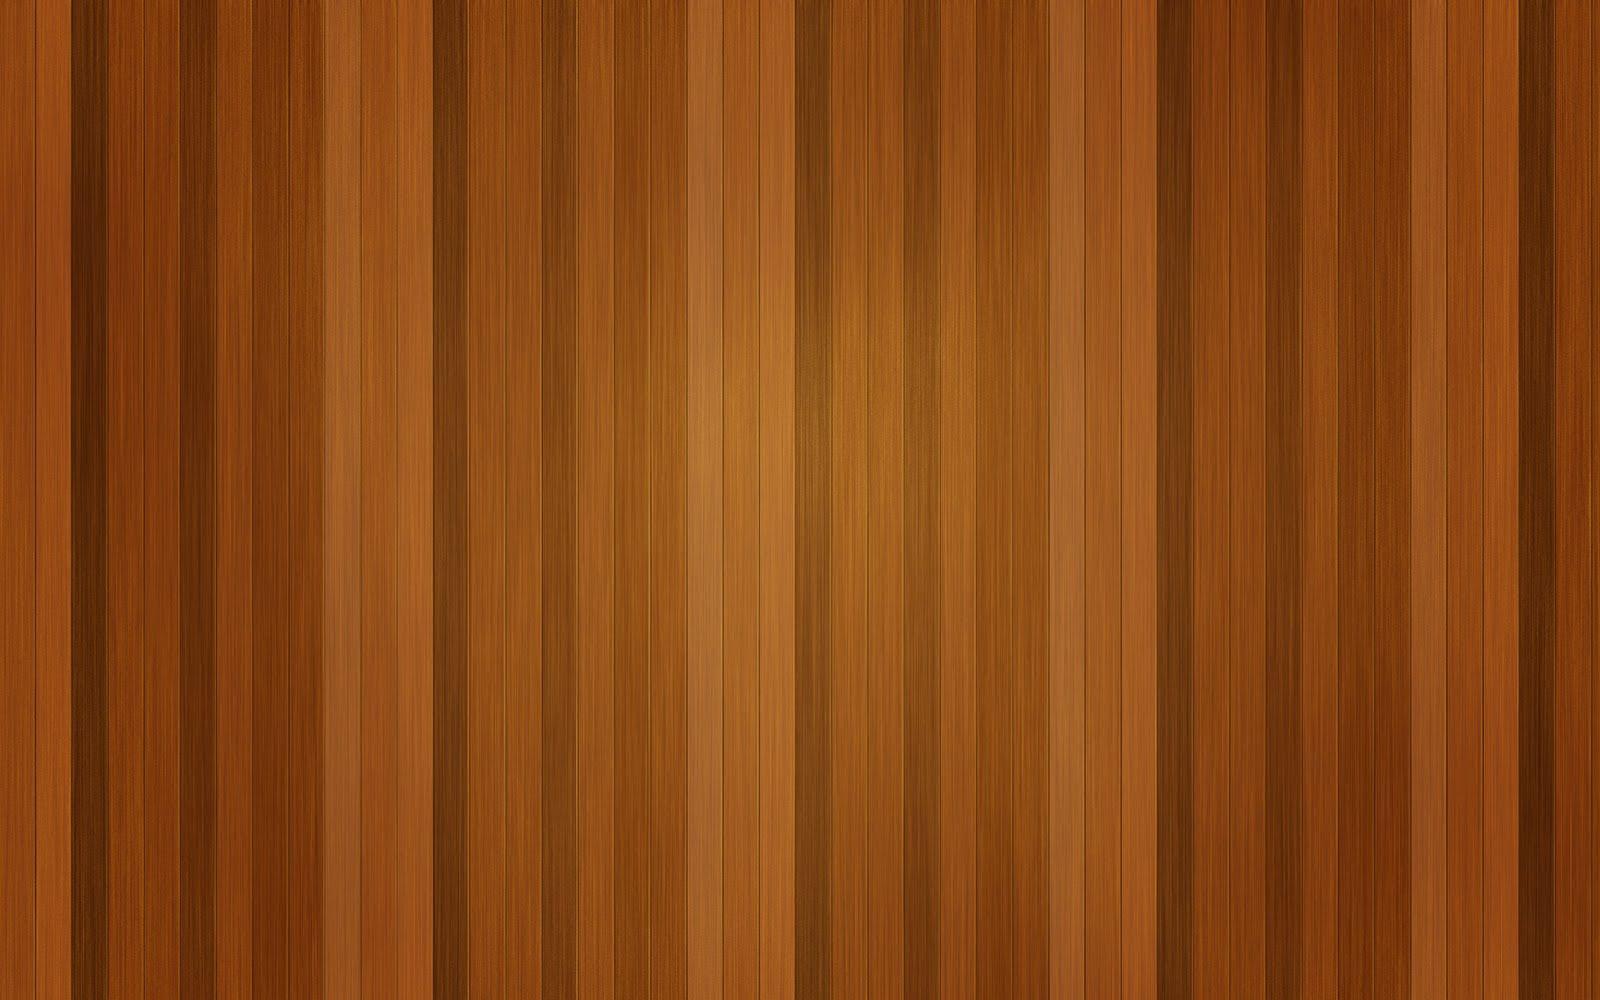 Best Top Desktop Hd Wall Wood Wallpaper Wood Wallpaper Wall